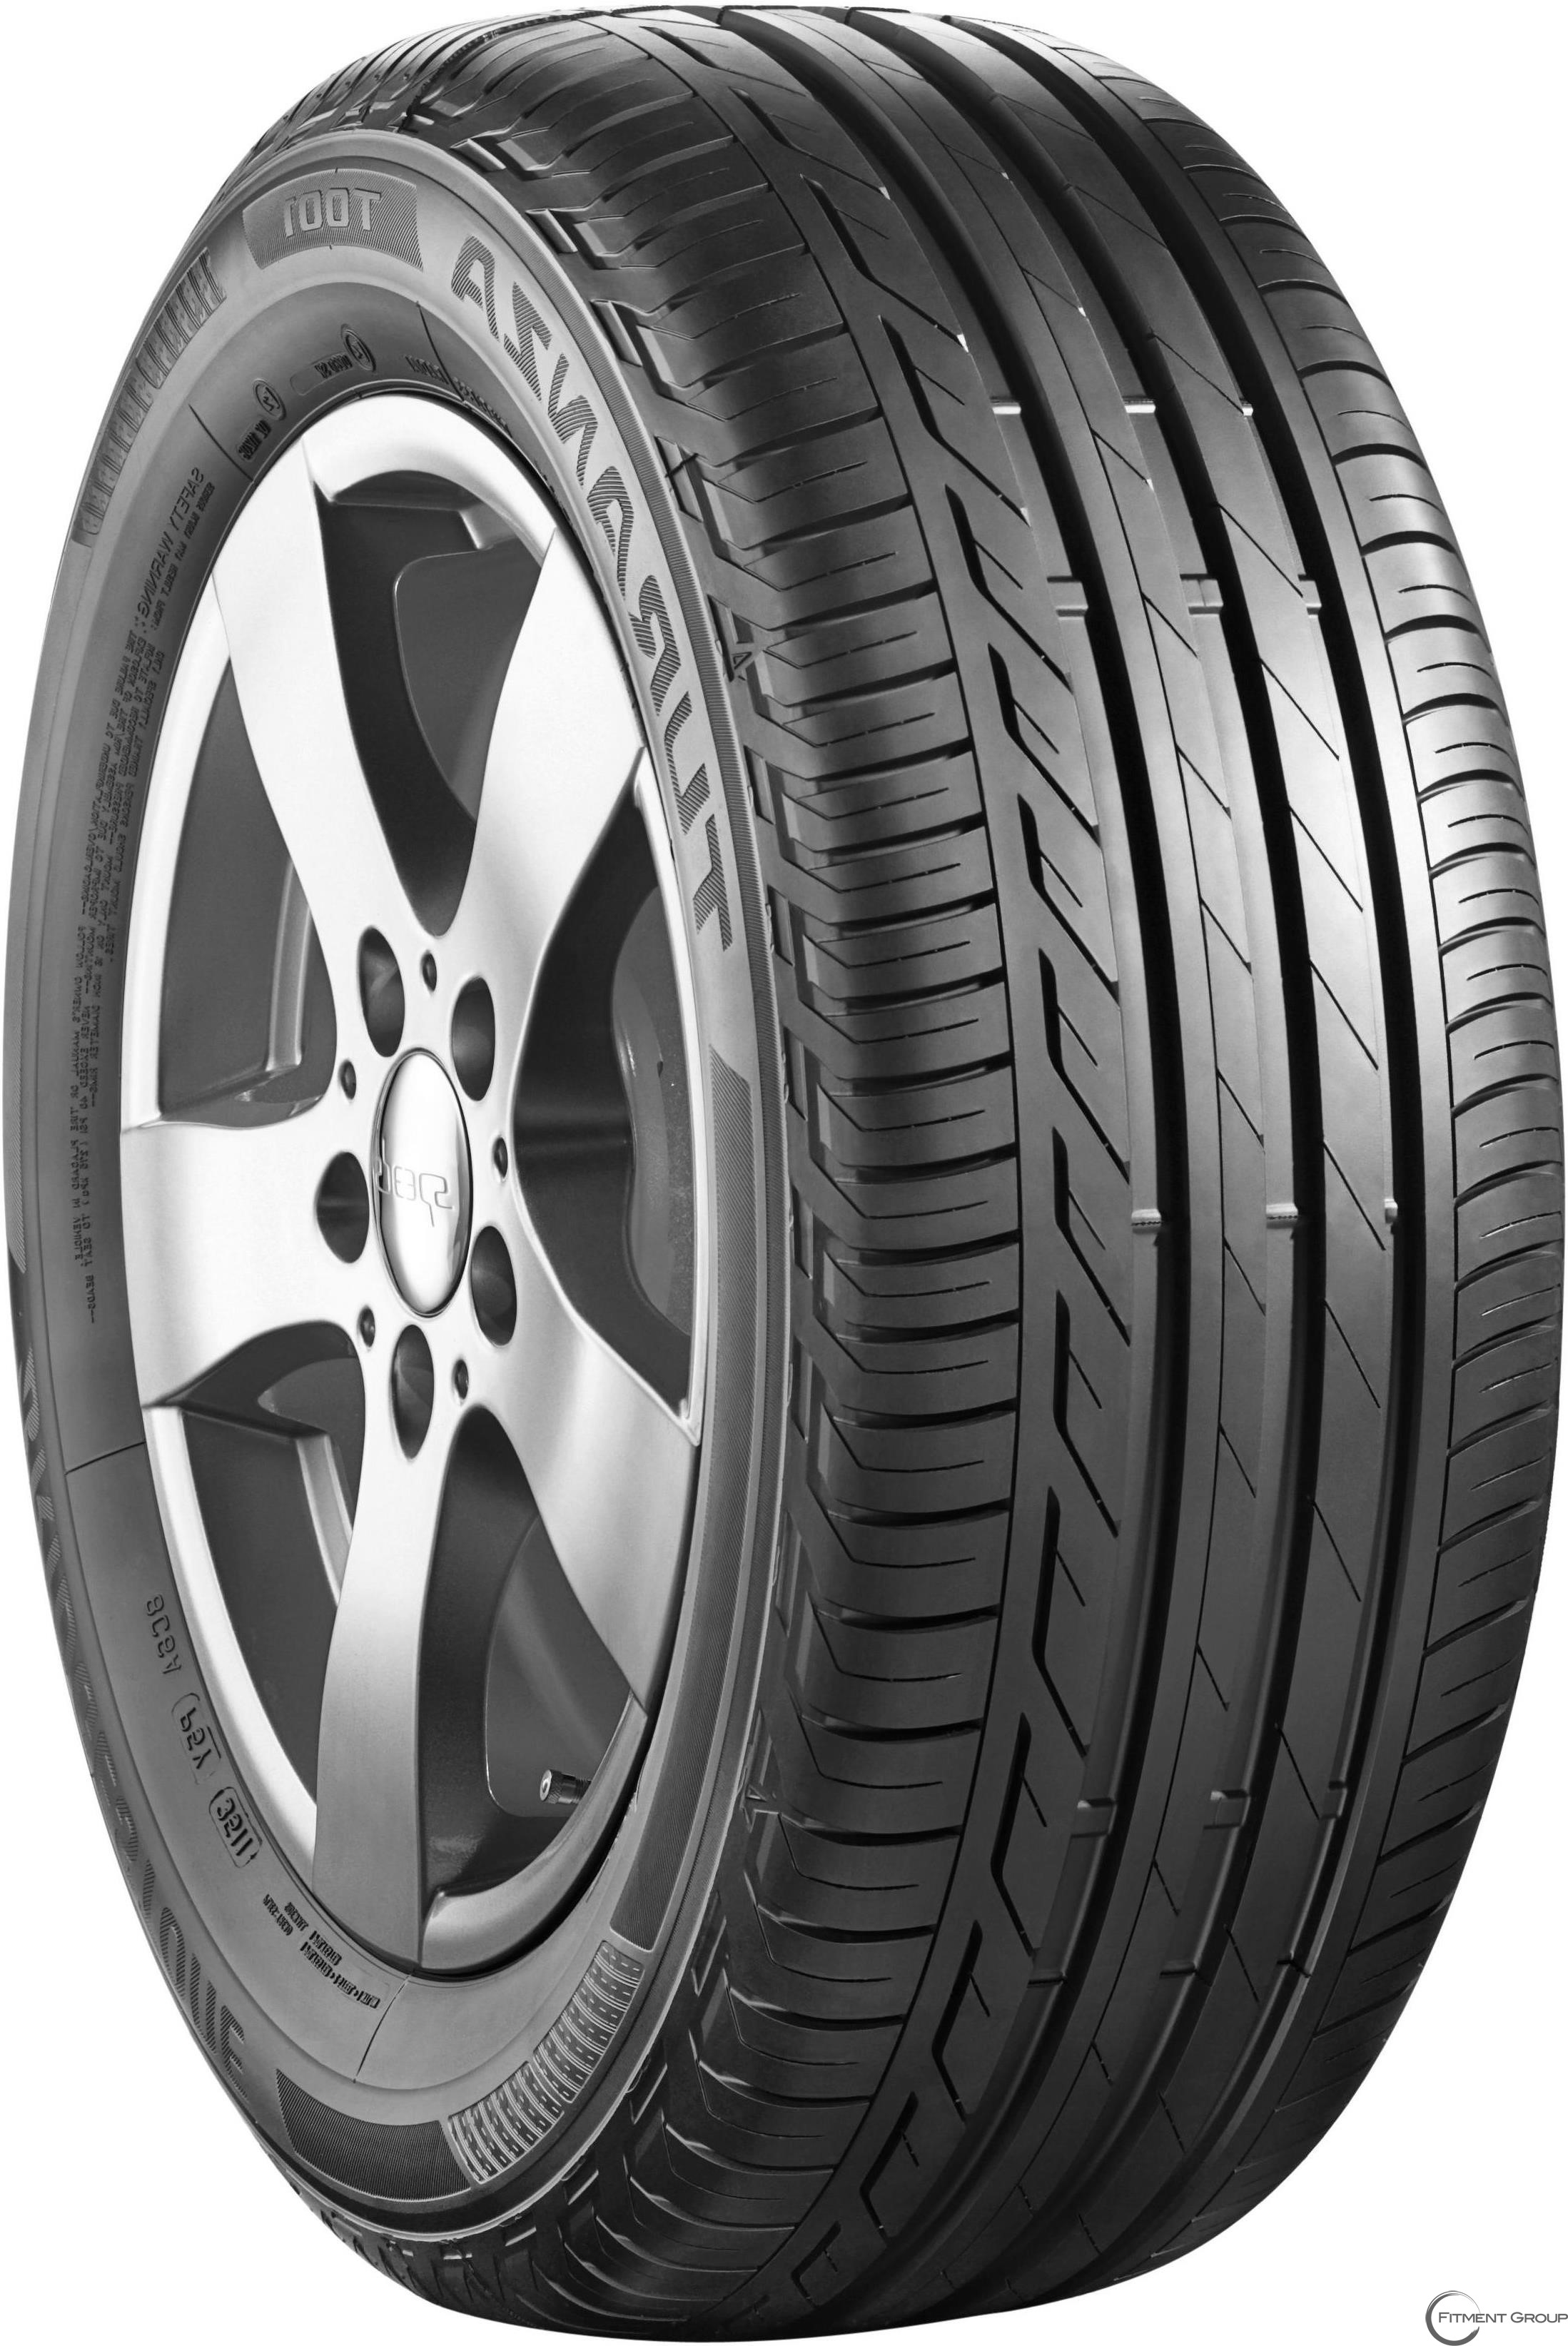 bridgestone-big-brand-tire-service-has-a-large-selection-of-tires